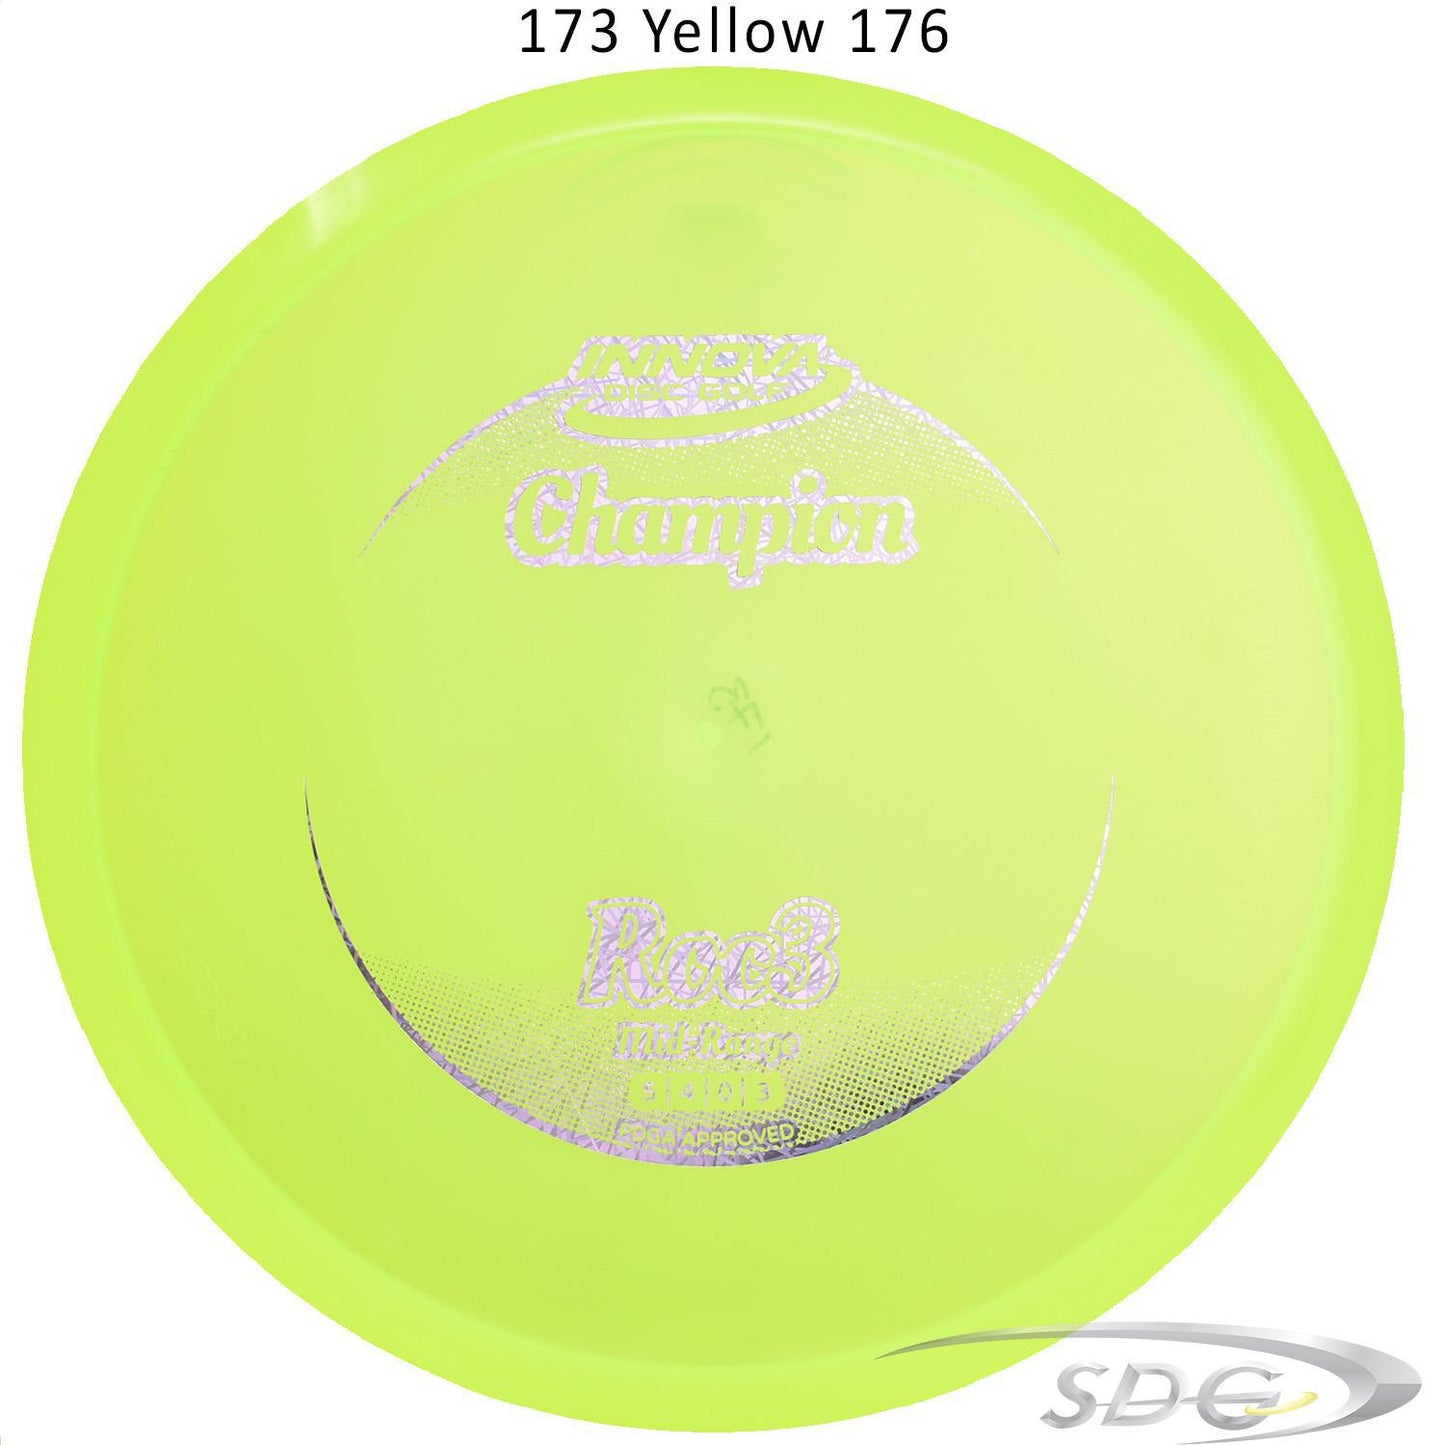 innova-champion-roc3-disc-golf-mid-range 173 Yellow 176 